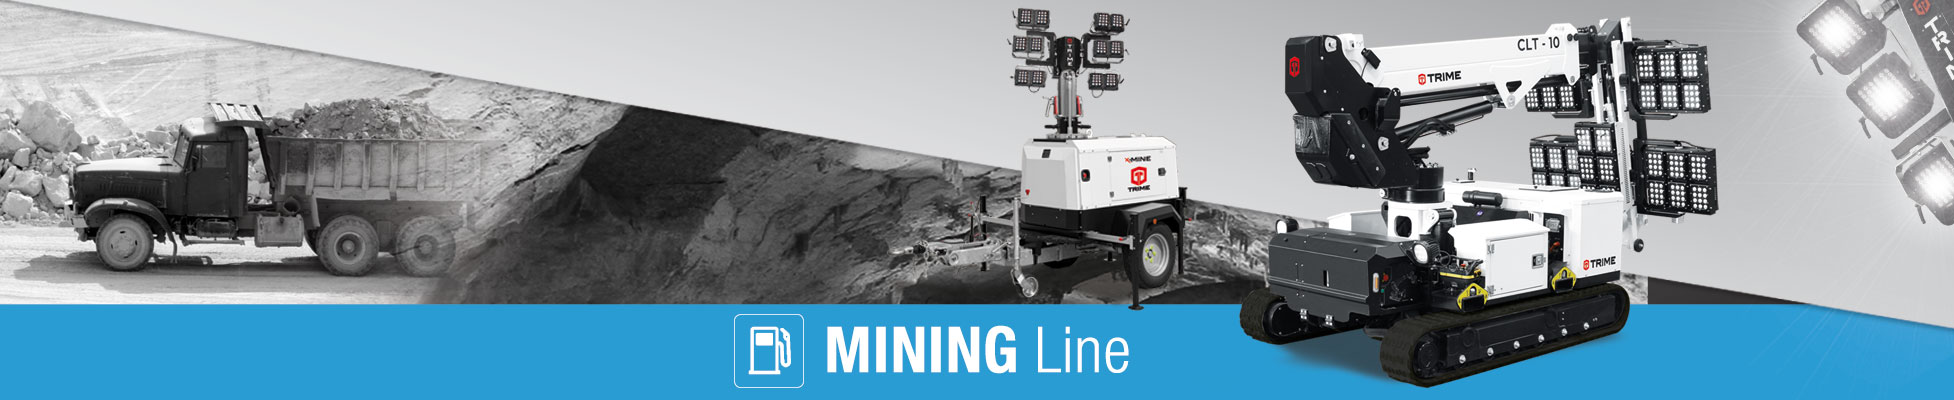 Mining Line